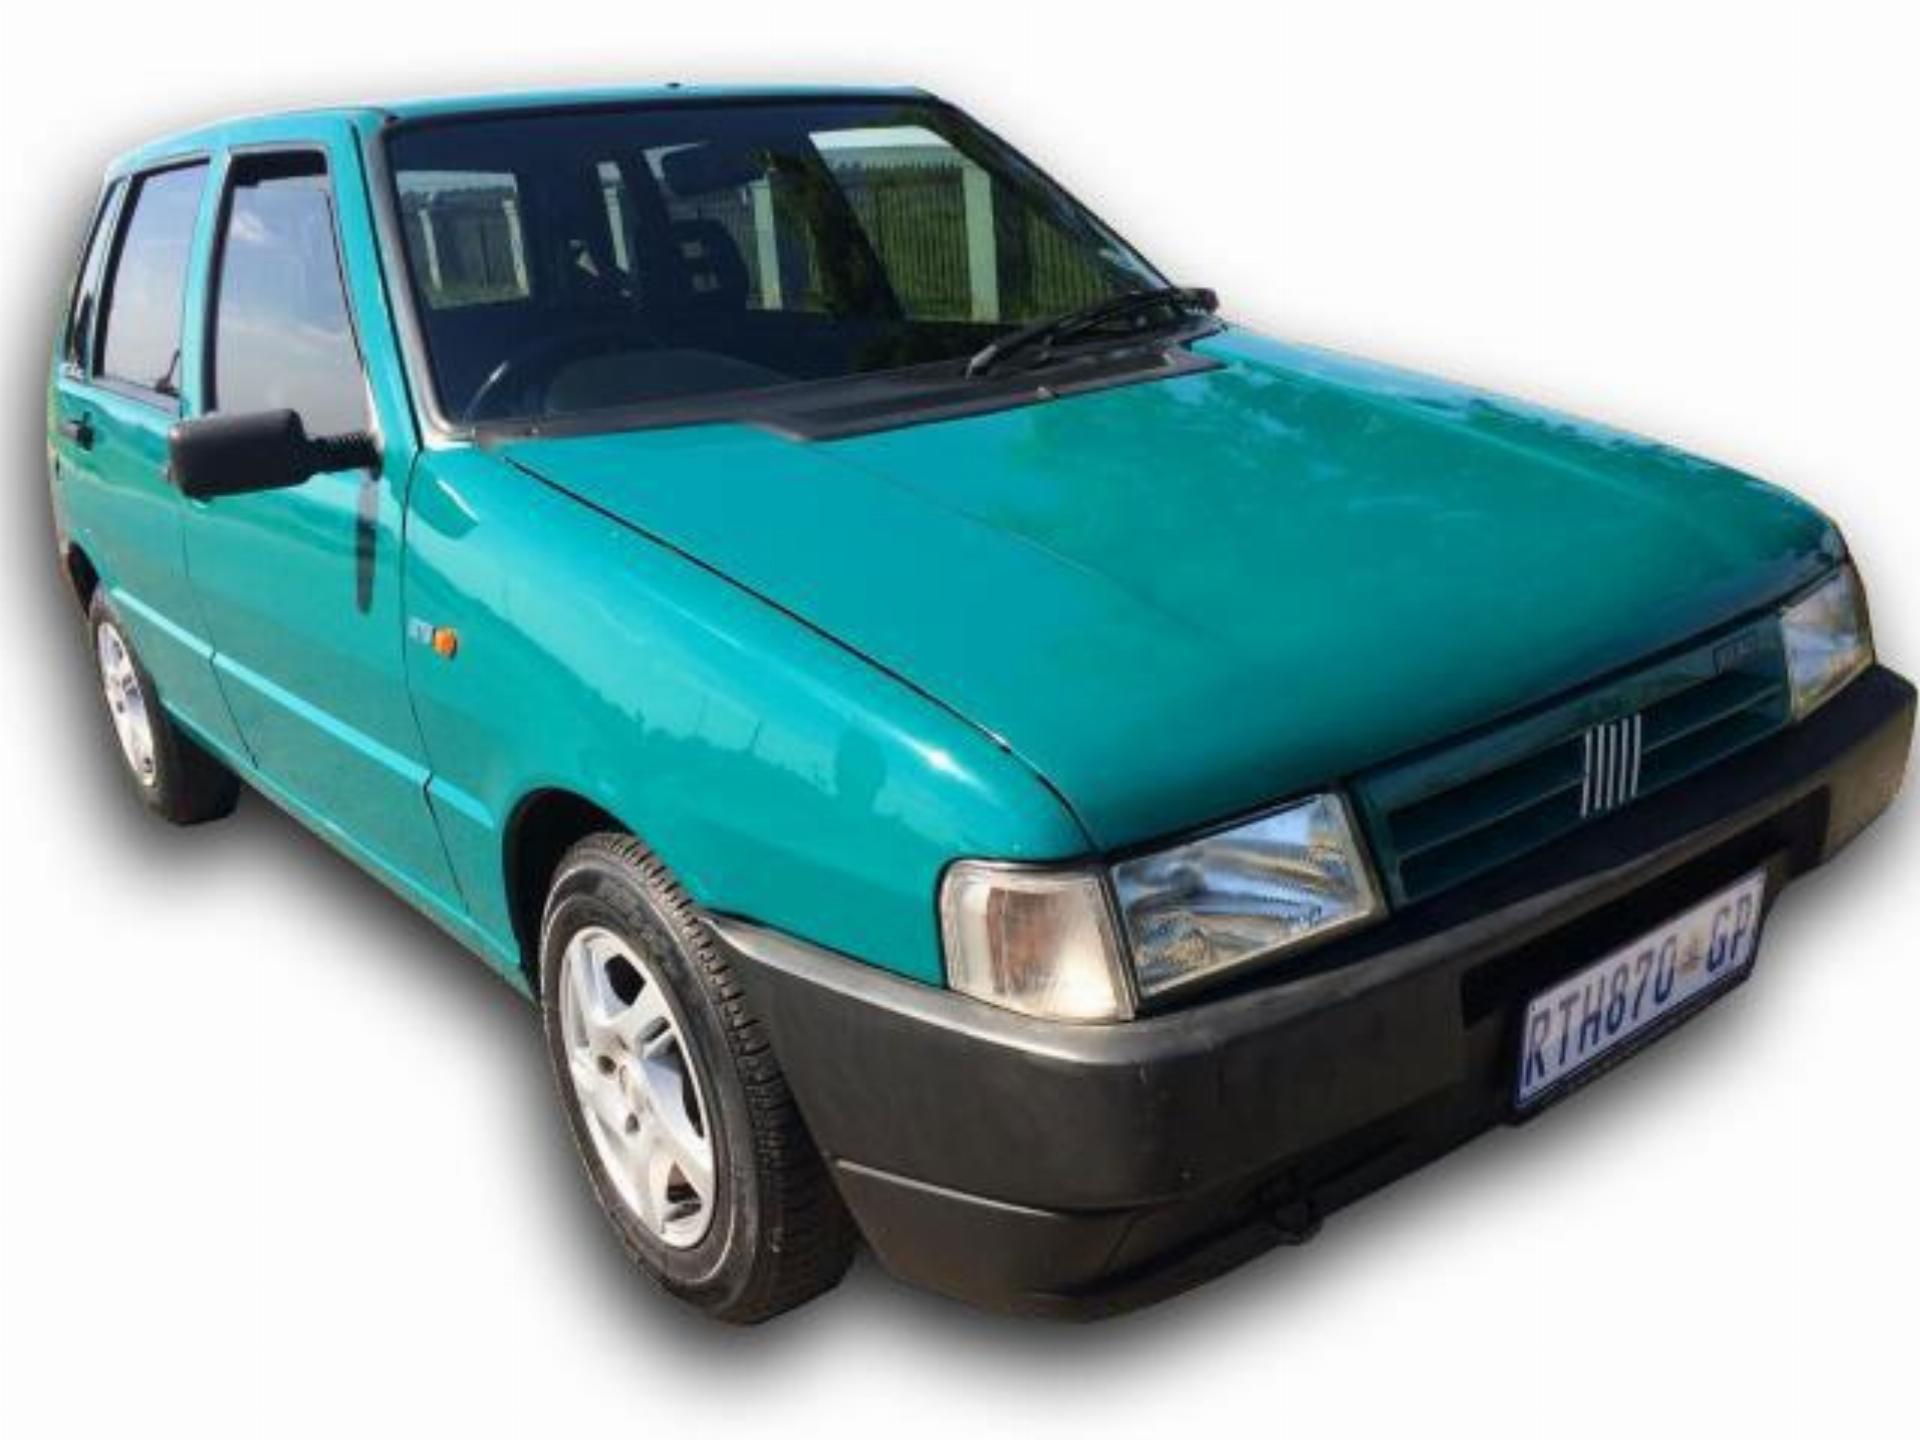 Used Fiat Uno Mia 1100, 4 Door 1995 on auction - PV1027708